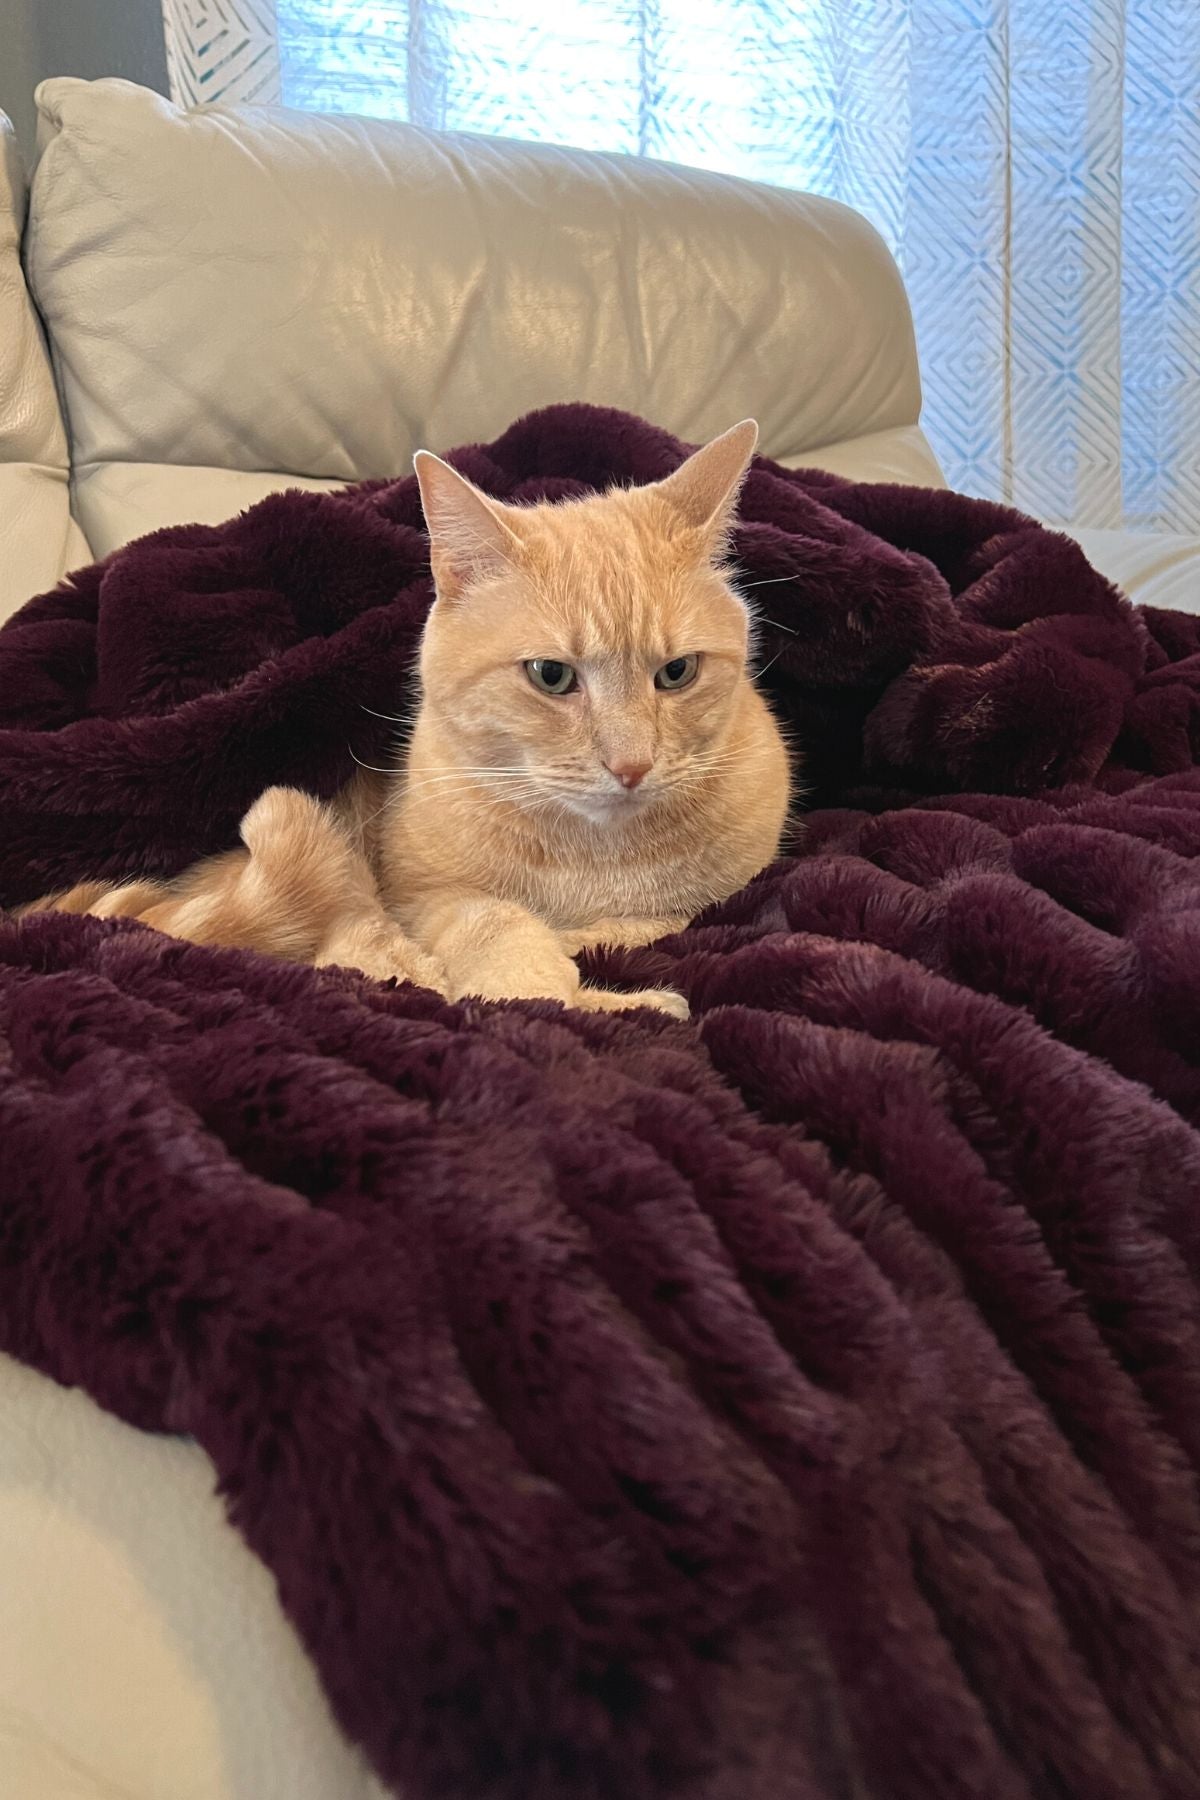 Cat nestled in Royal Opulence Merlot Pet Blanket in Standard Size. Handmade by Pandemonium Seattle.